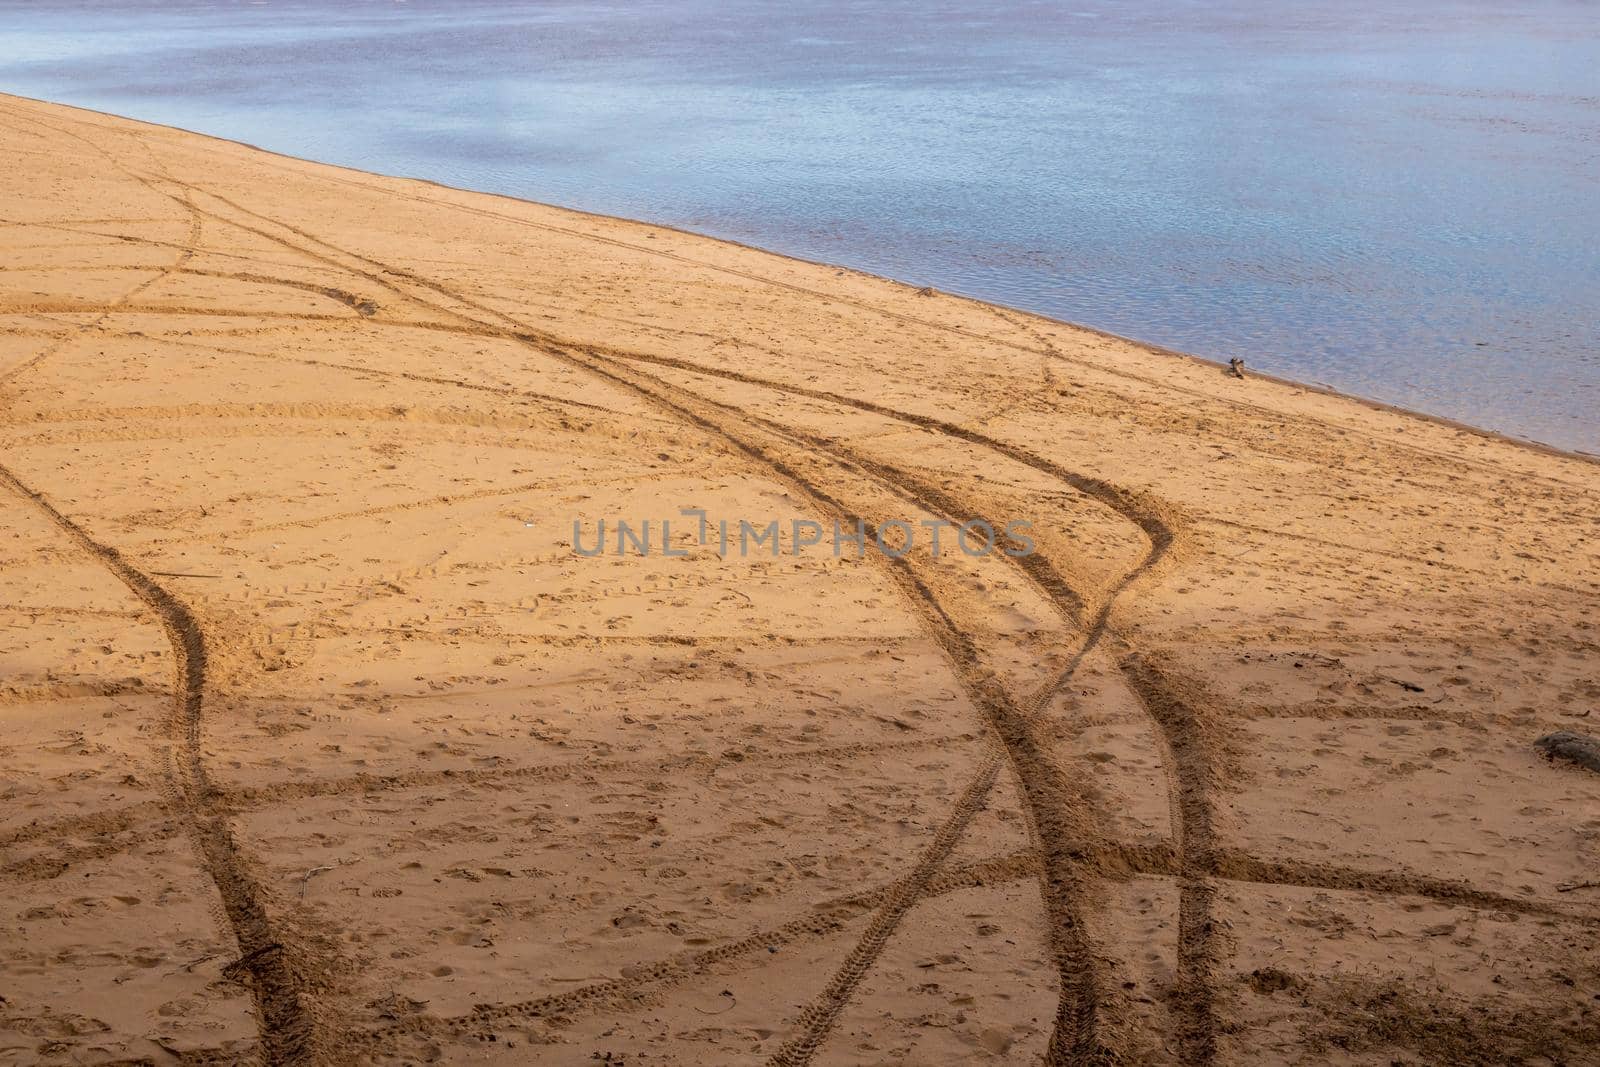 Tire tracks on the sand of an empty beach near the river.